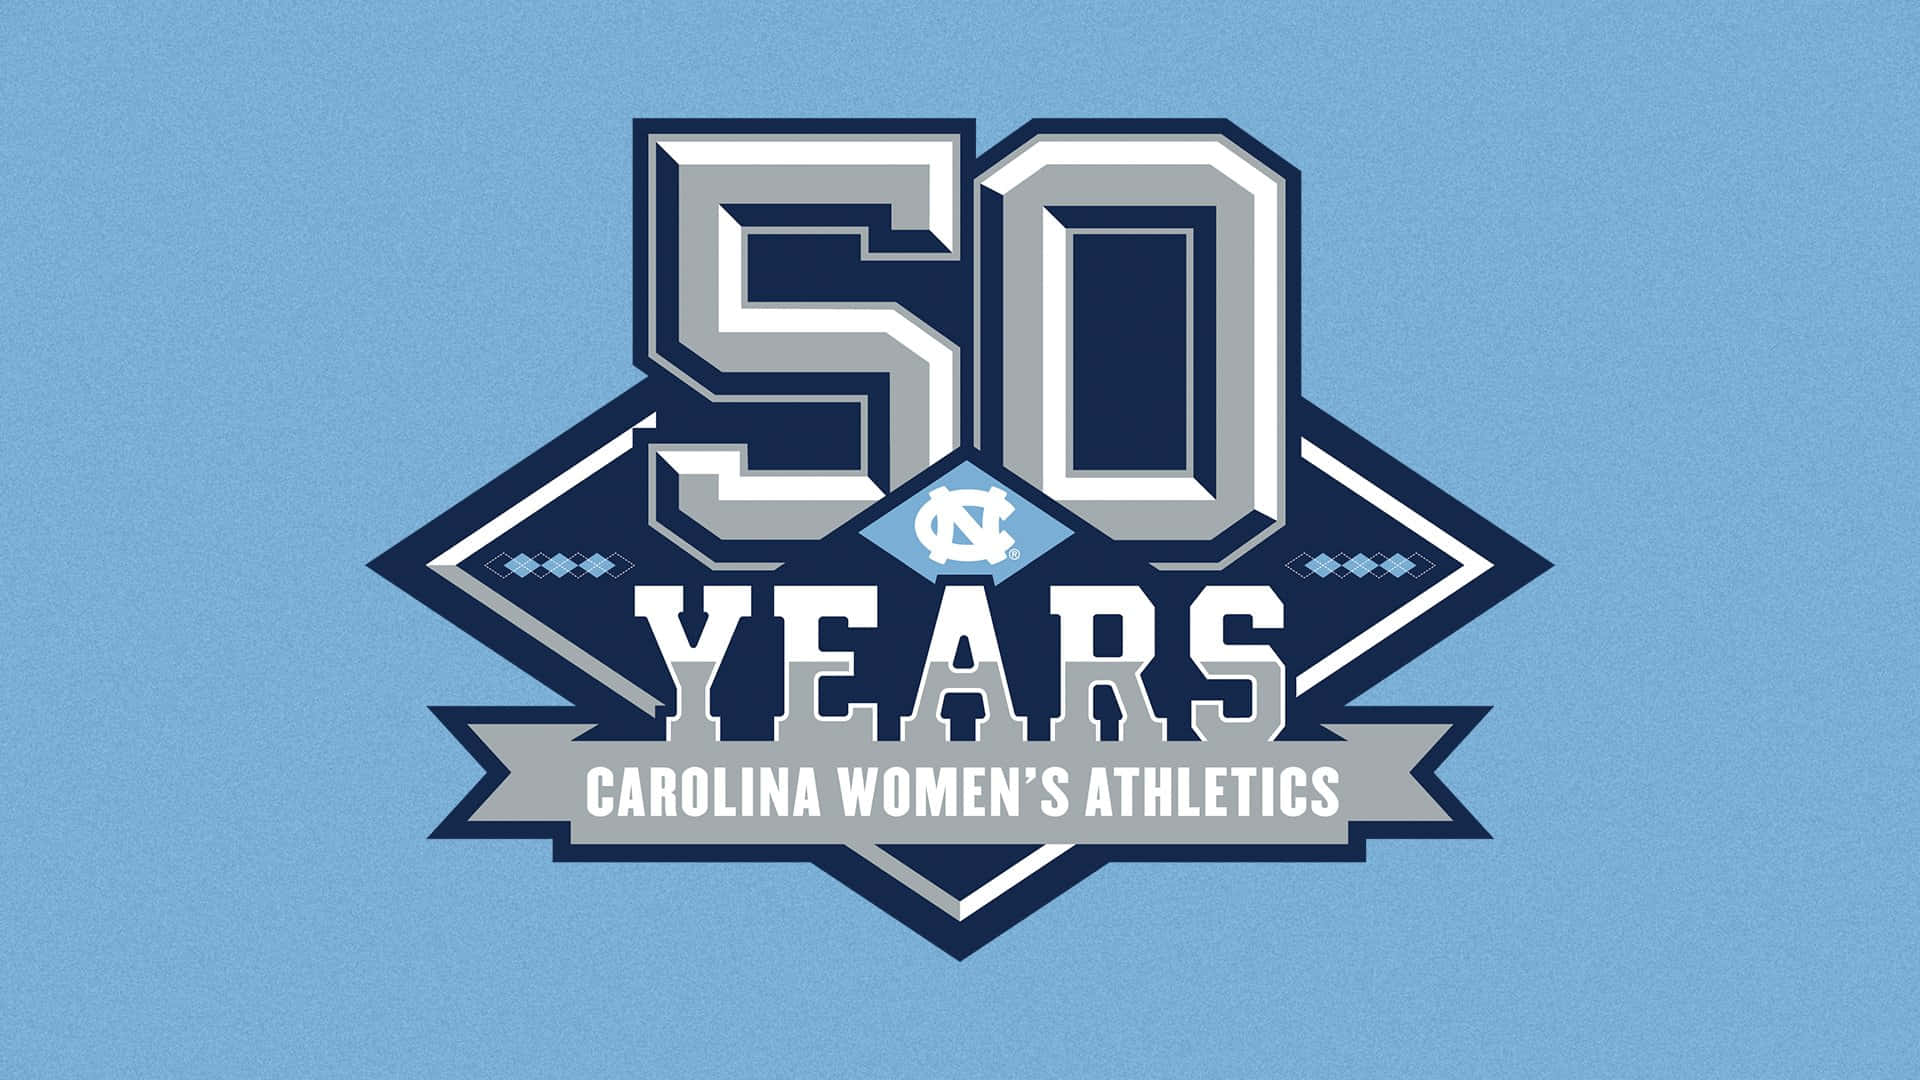 The Logo For The 50th Anniversary Of The Carolina Women's Athletics